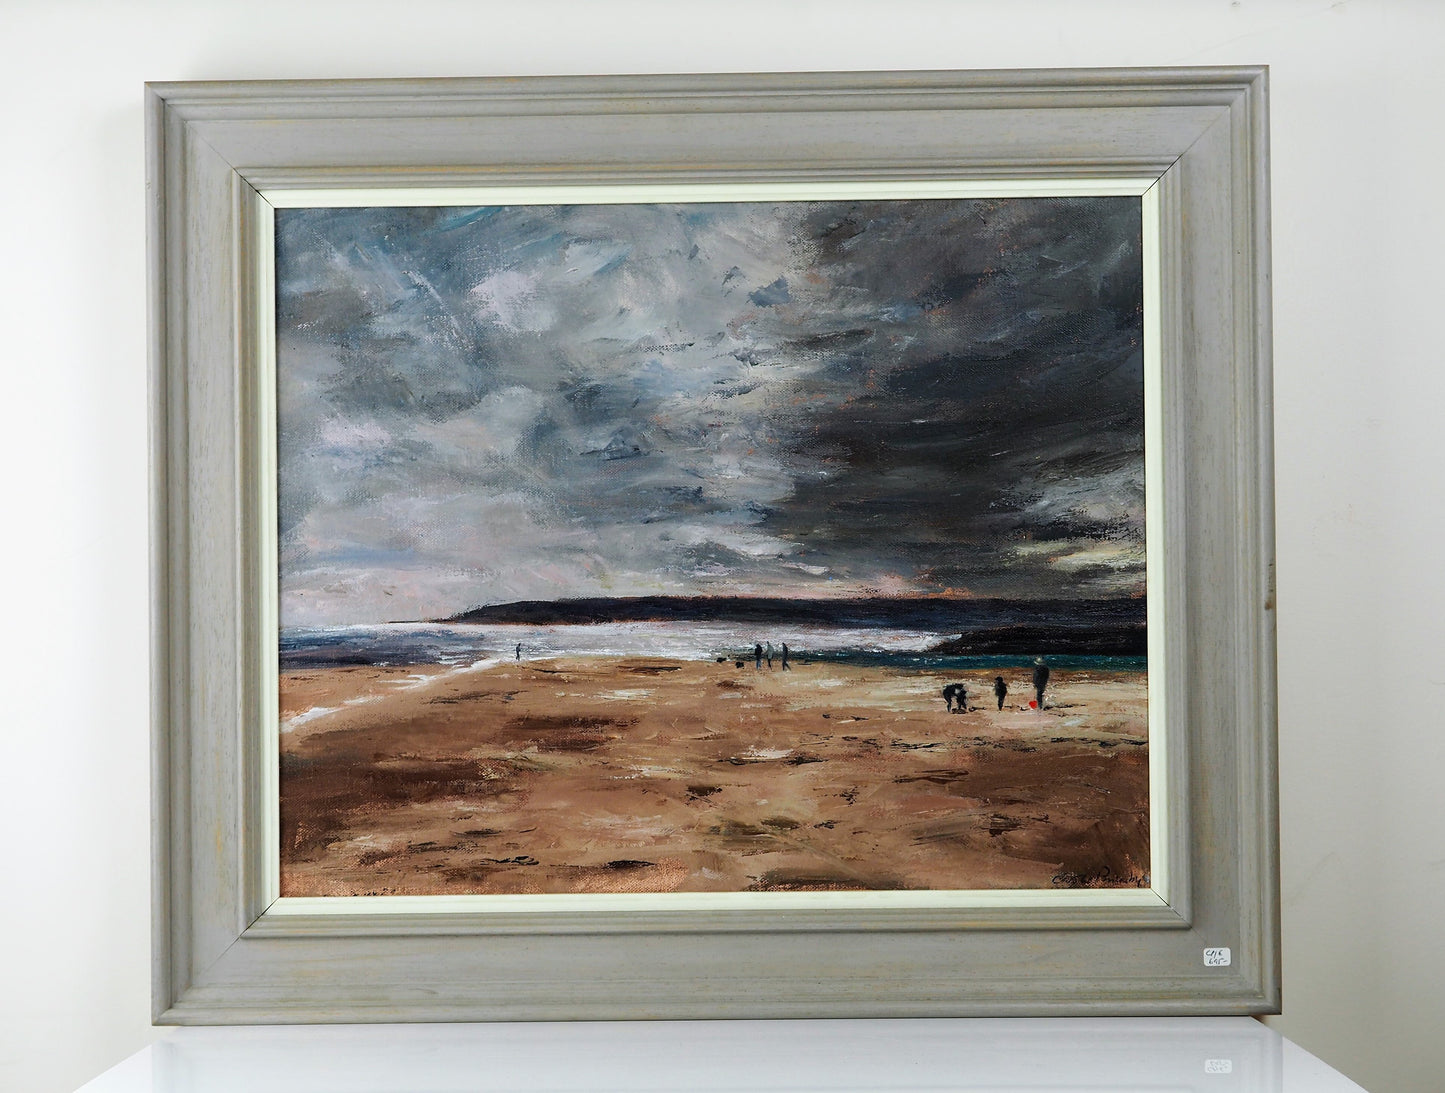 Ponsonby, Caroline – Threatening Cloud-Marazion-Cornwall | Caroline Ponsonby | Primavera Gallery